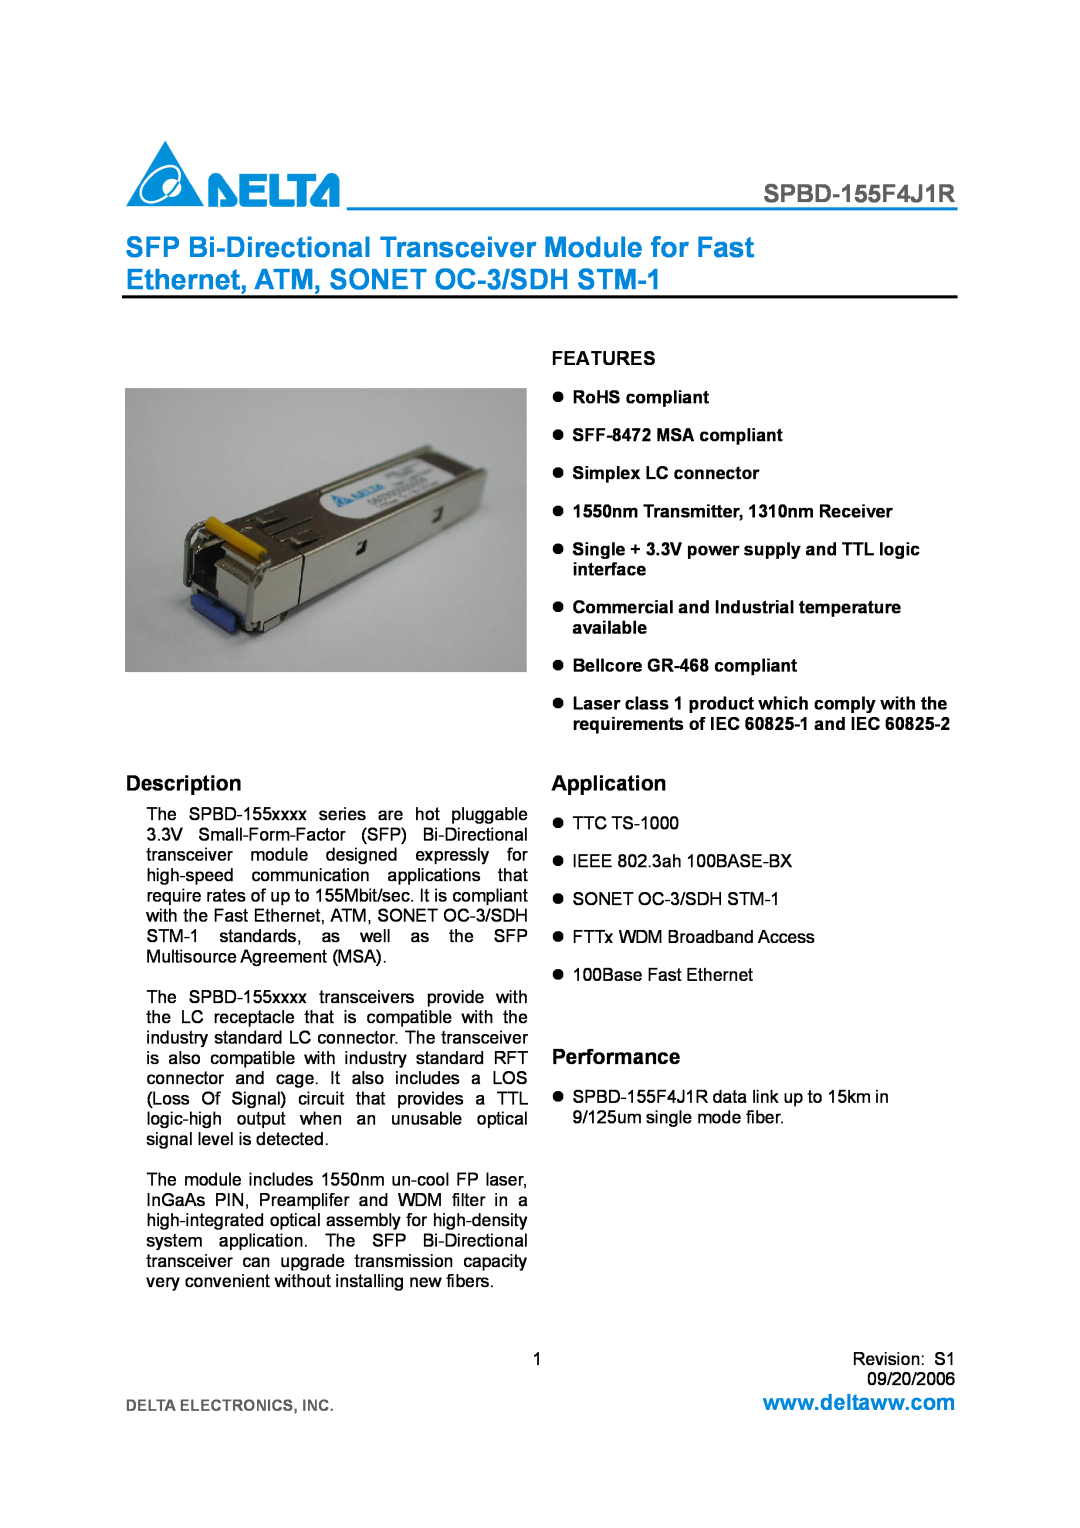 Delta Electronics SPBD-155F4J1R manual Description, Application, Performance, 1550nm Transmitter, 1310nm Receiver 